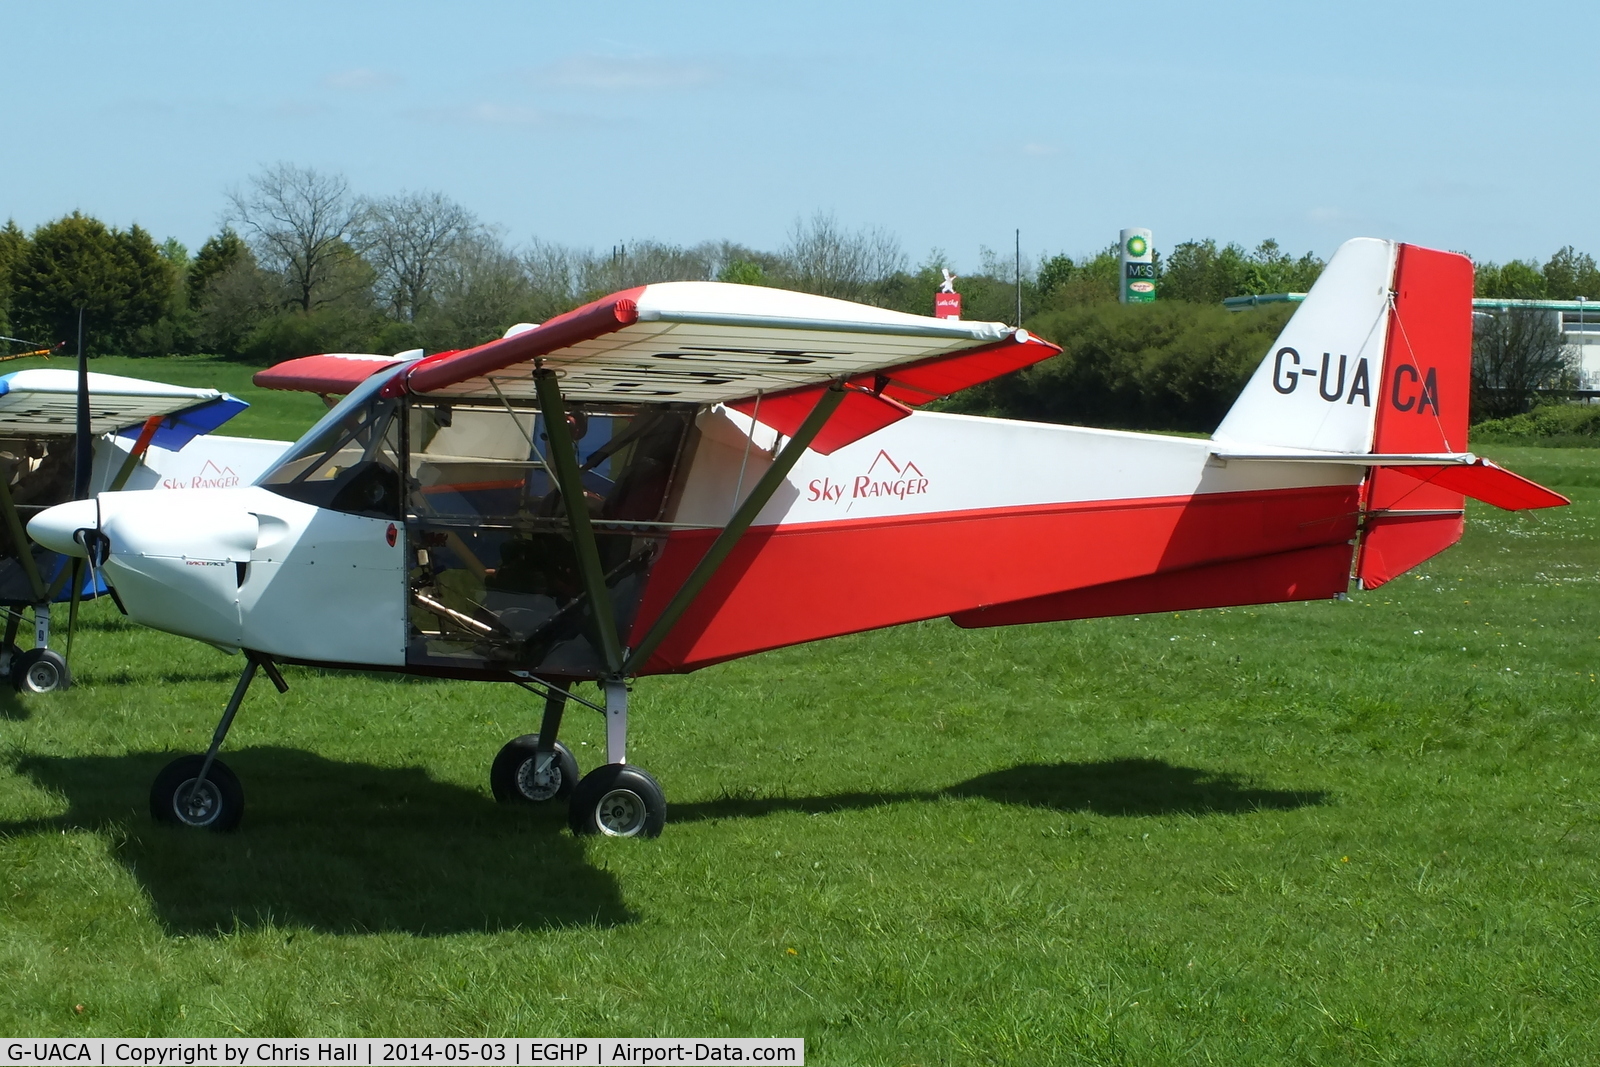 G-UACA, 2004 Best Off SkyRanger Swift 912(1) C/N BMAA/HB/324, at the 2014 Microlight Trade Fair, Popham